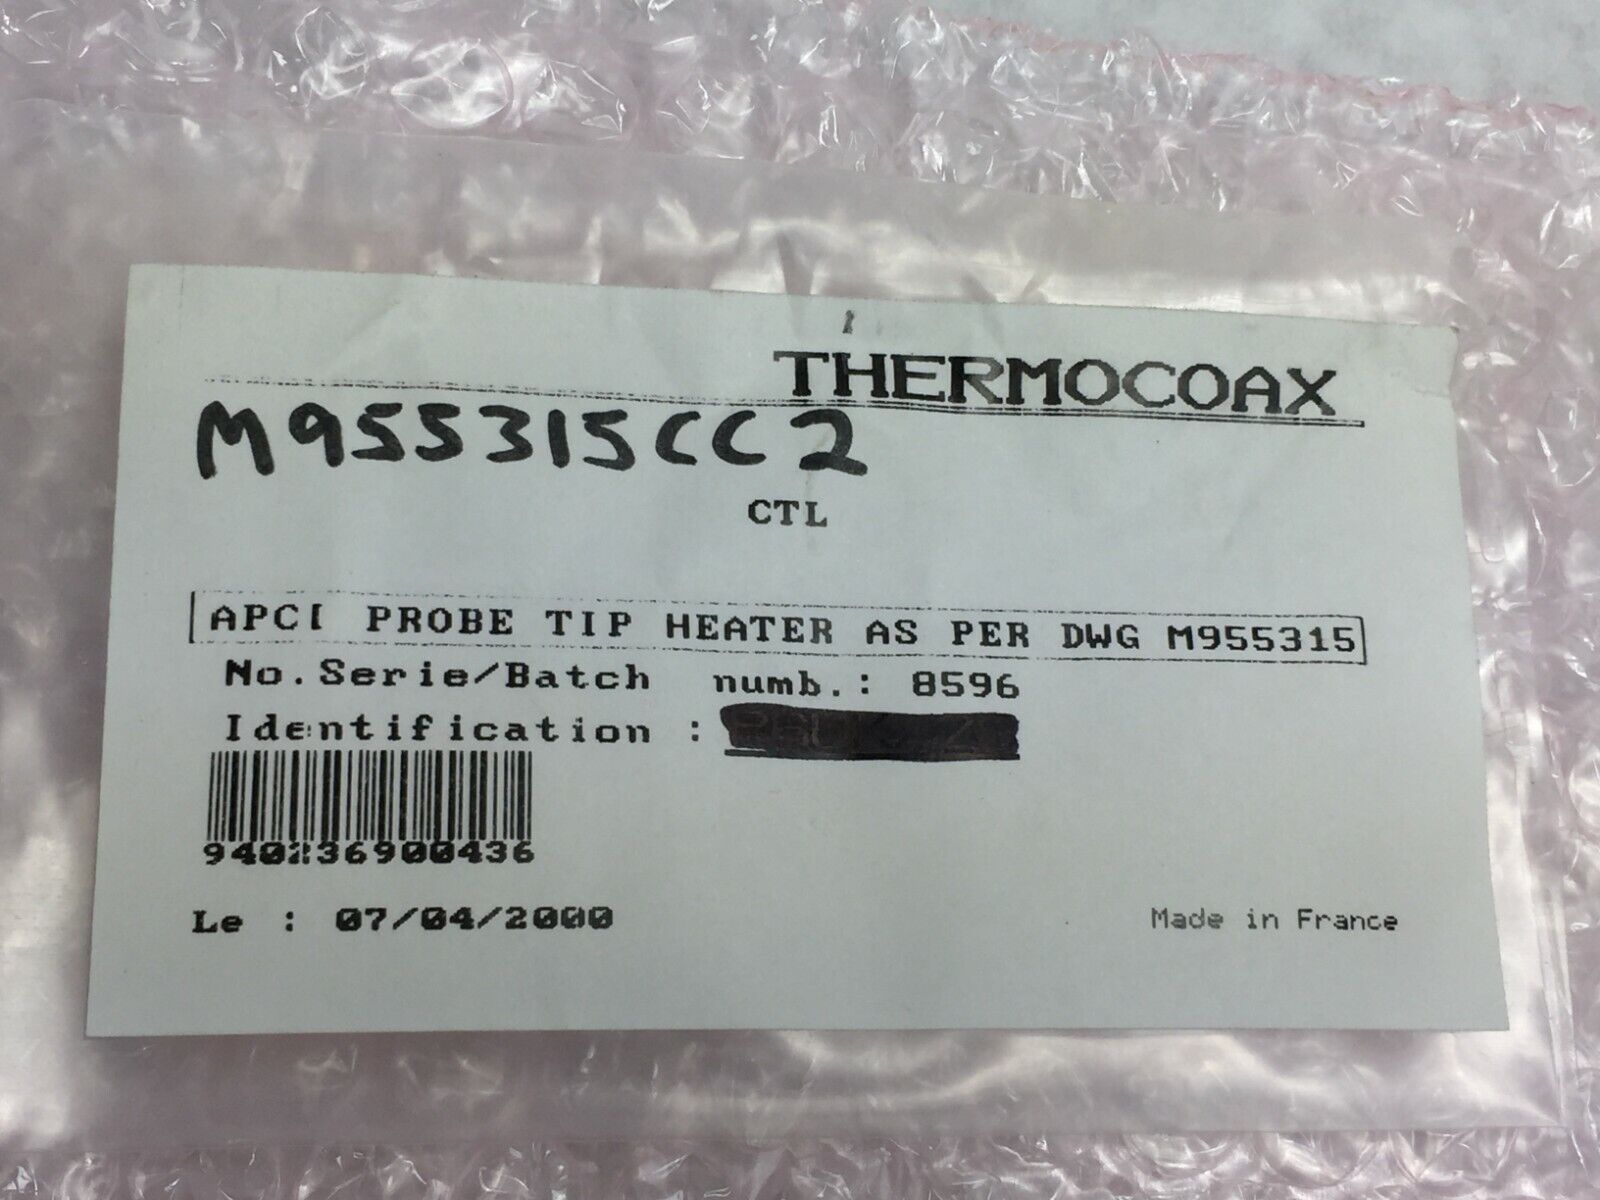 Thermocoax APCI Probe Tip Heater As Per DWG M955315